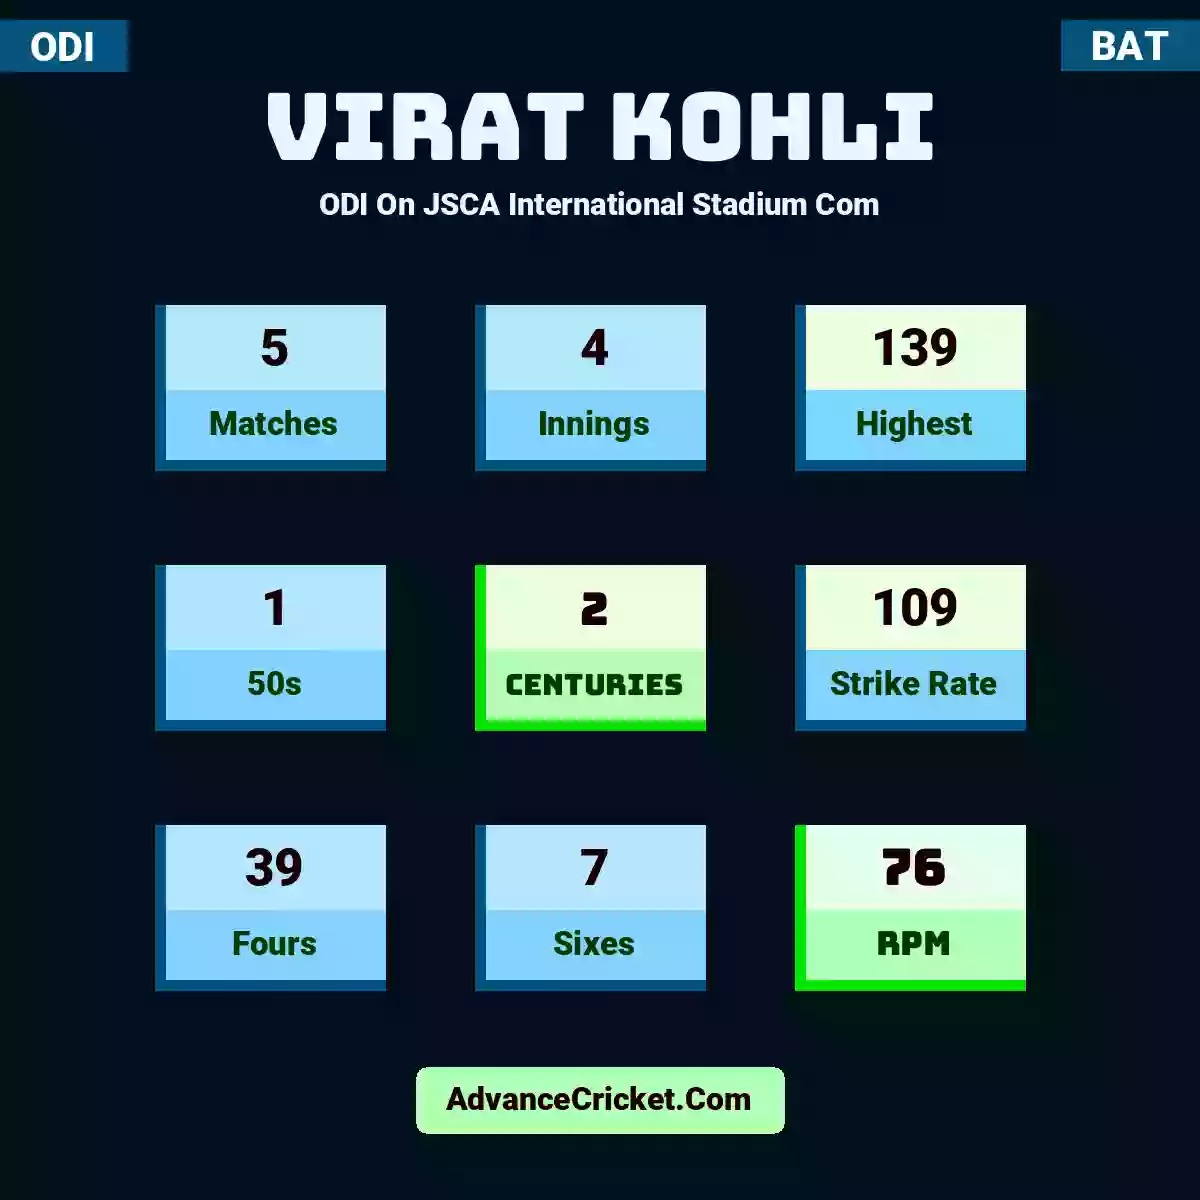 Virat Kohli ODI  On JSCA International Stadium Com, Virat Kohli played 5 matches, scored 139 runs as highest, 1 half-centuries, and 2 centuries, with a strike rate of 109. V.Kohli hit 39 fours and 7 sixes, with an RPM of 76.